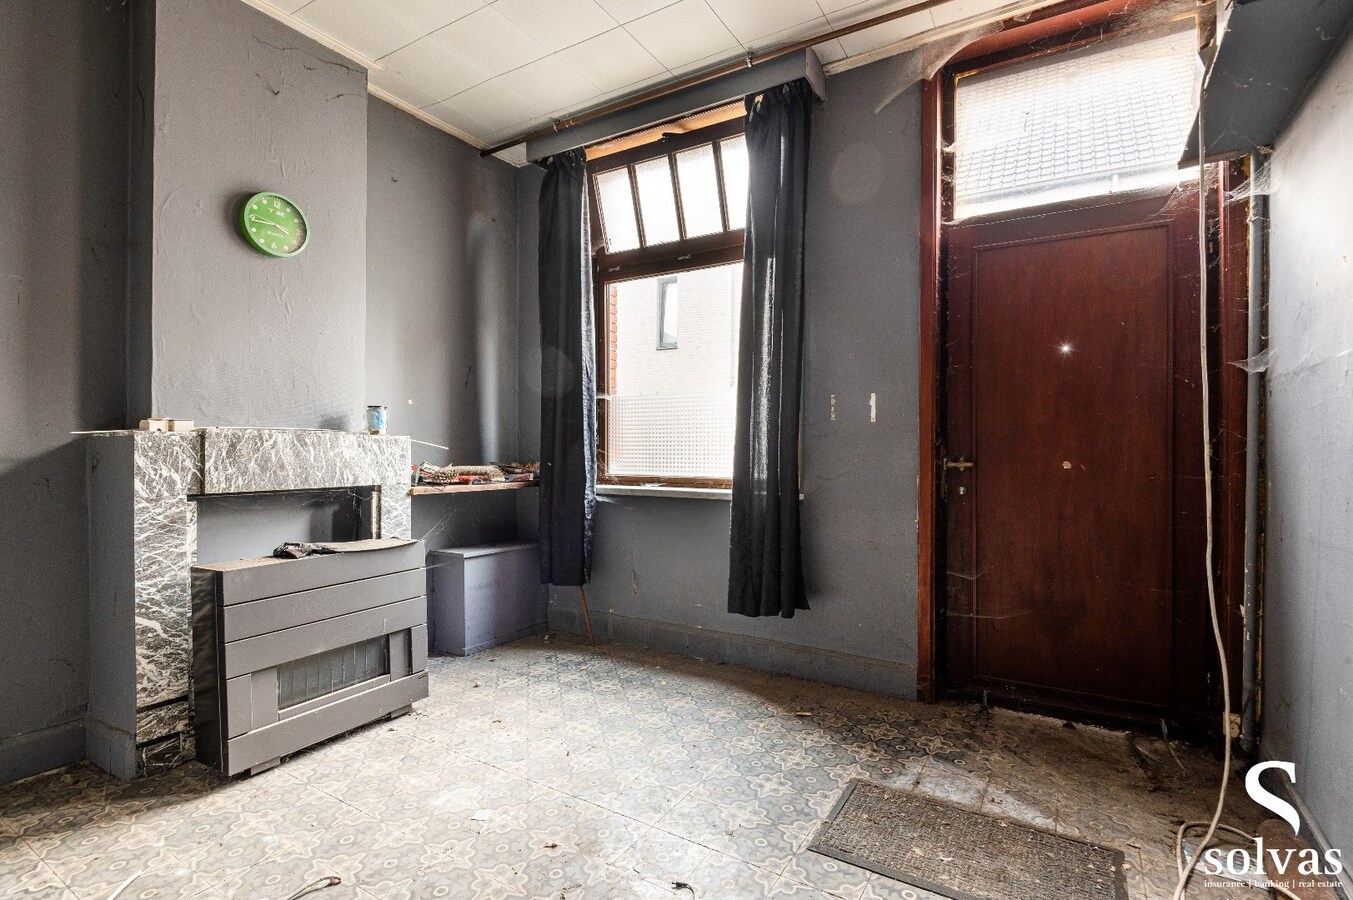 Te renoveren woning in centrum Maldegem met 2 slaapkamers 